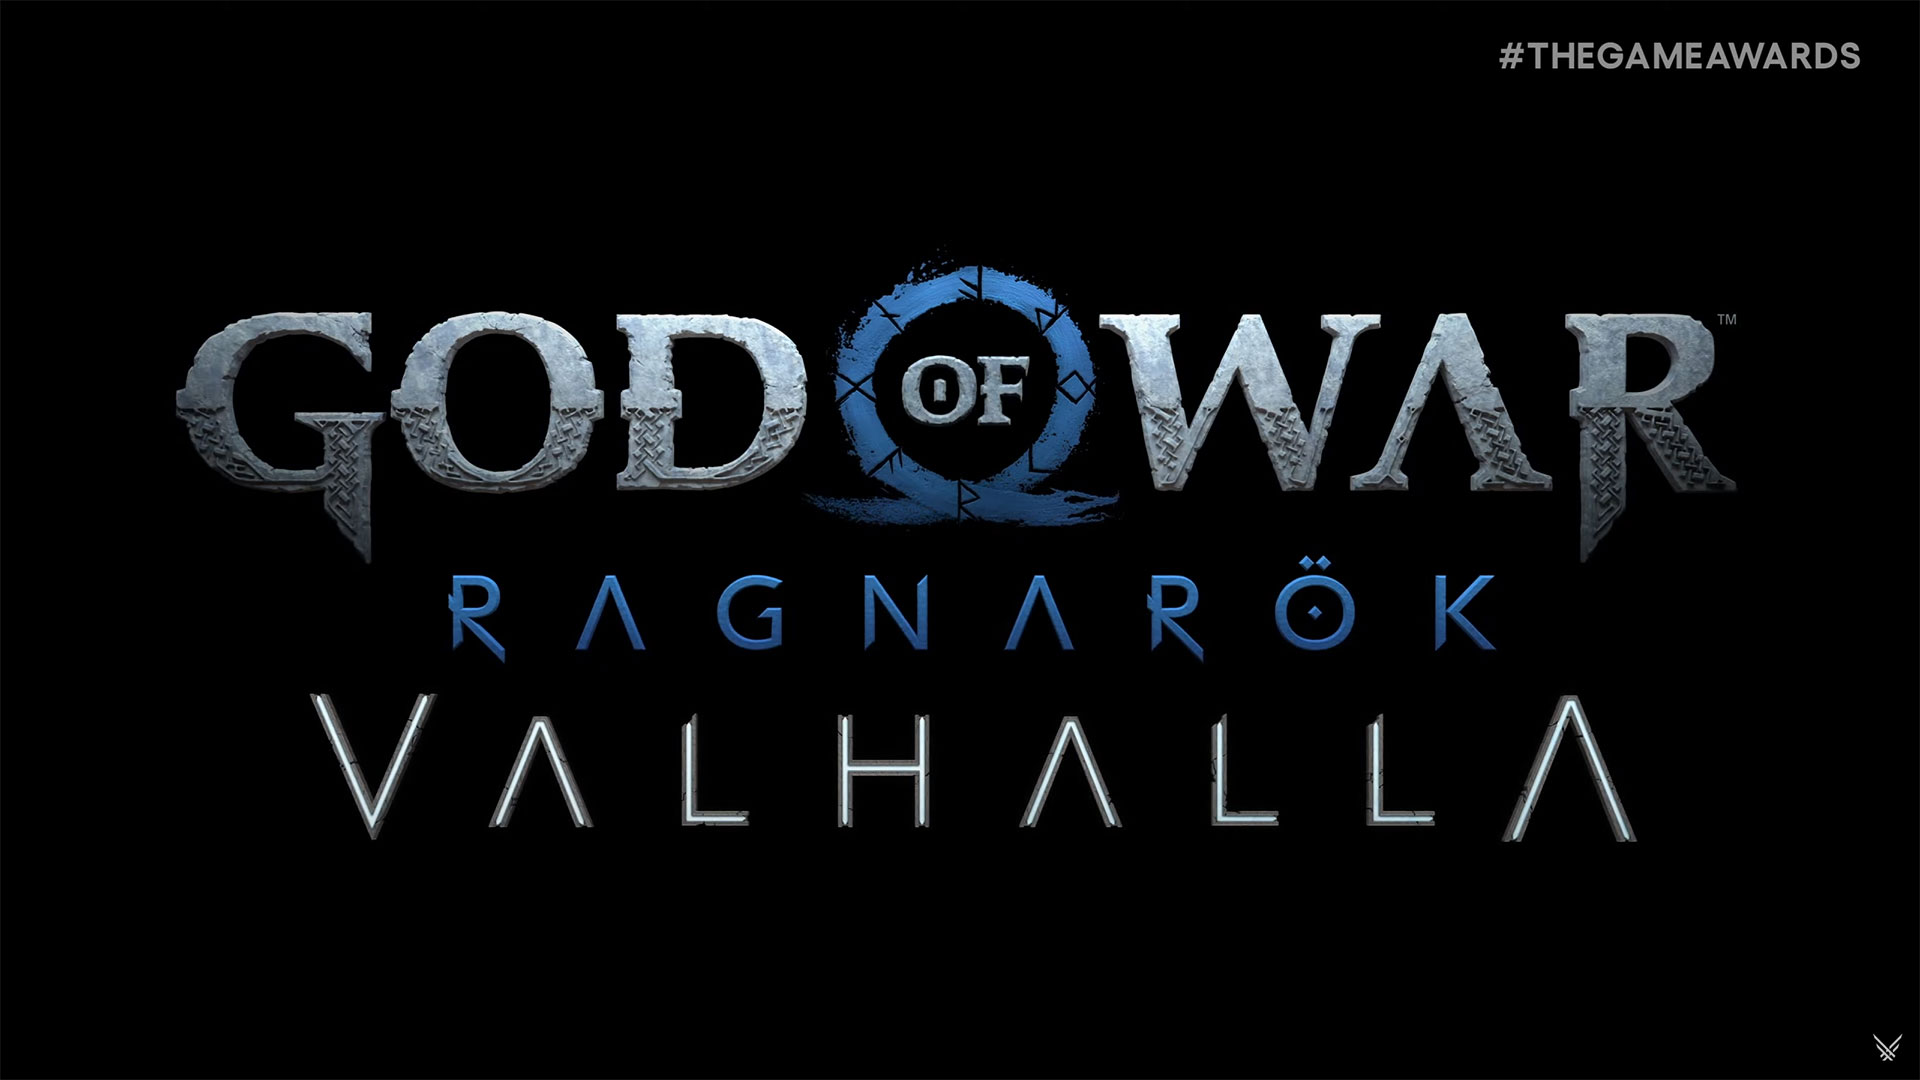 God of War Ragnarök is getting a free Valhalla DLC that adds a roguelike mode